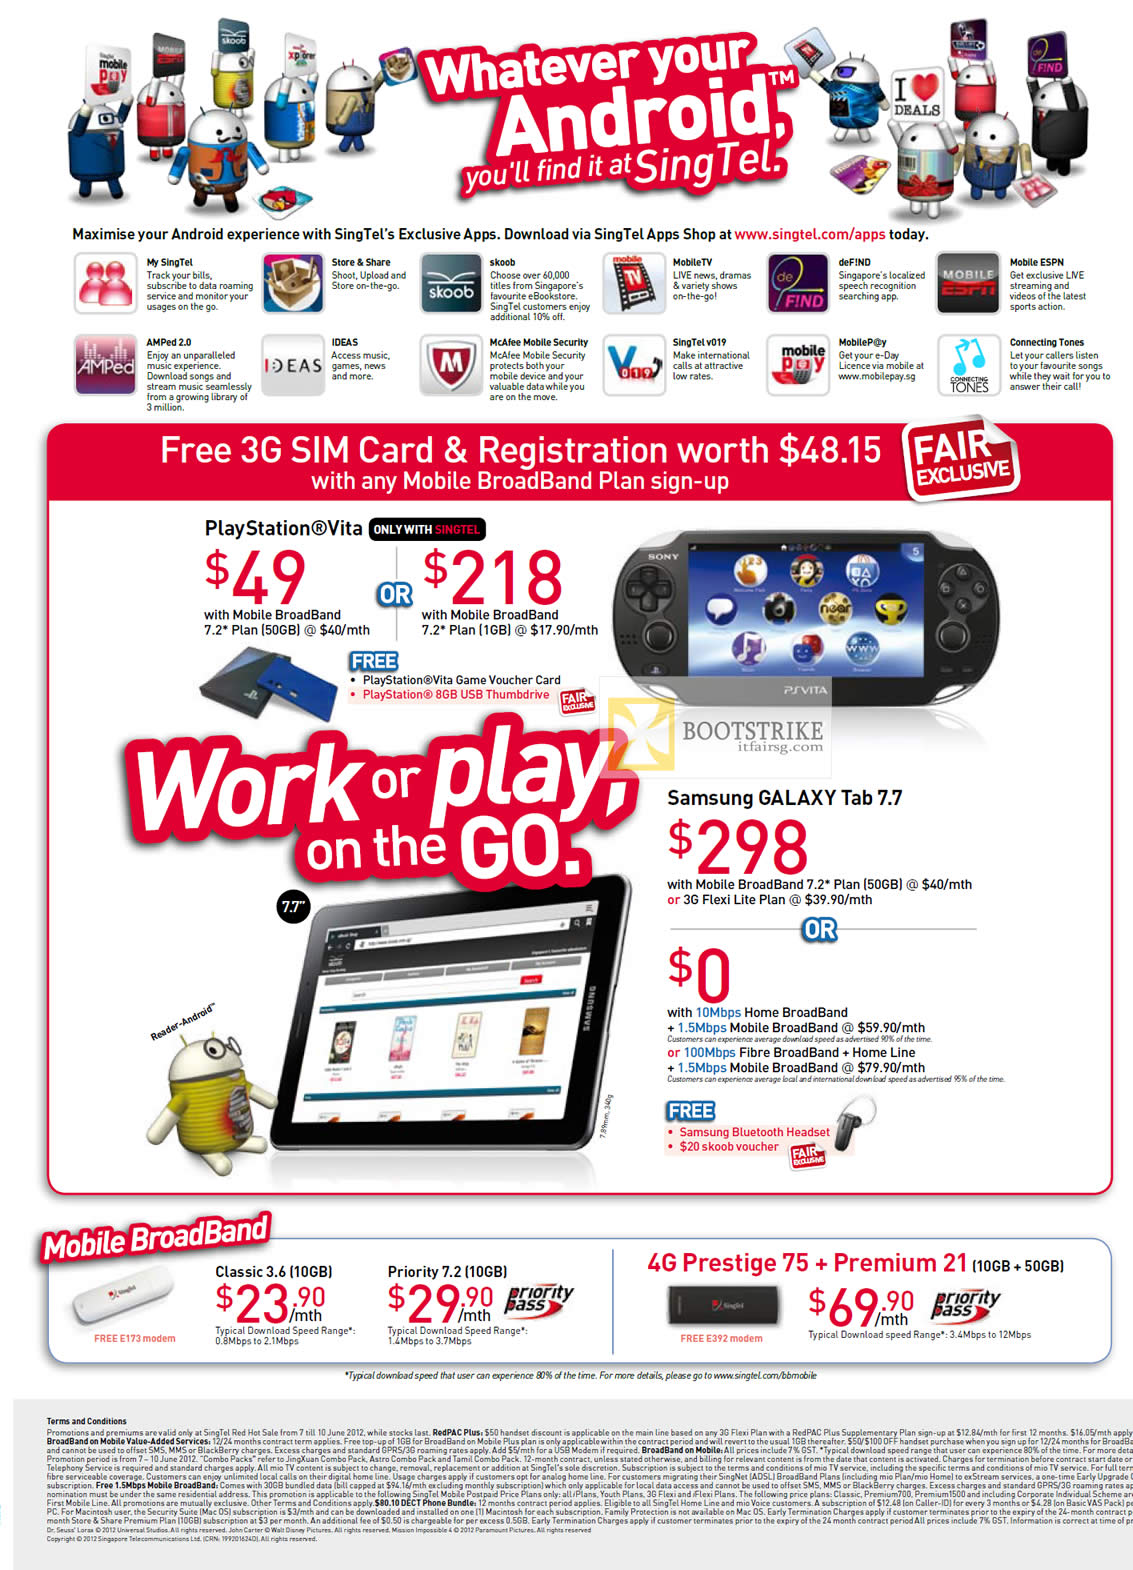 PC SHOW 2012 price list image brochure of Singtel Apps Shop, Sony PlayStation Vita, Free 3G SIM Card, Registration, Samsung Galaxy Tab 7.7, Mobile Broadband Classic 3.6, Priority 7.2, 4G Prestige 75, Premium 21